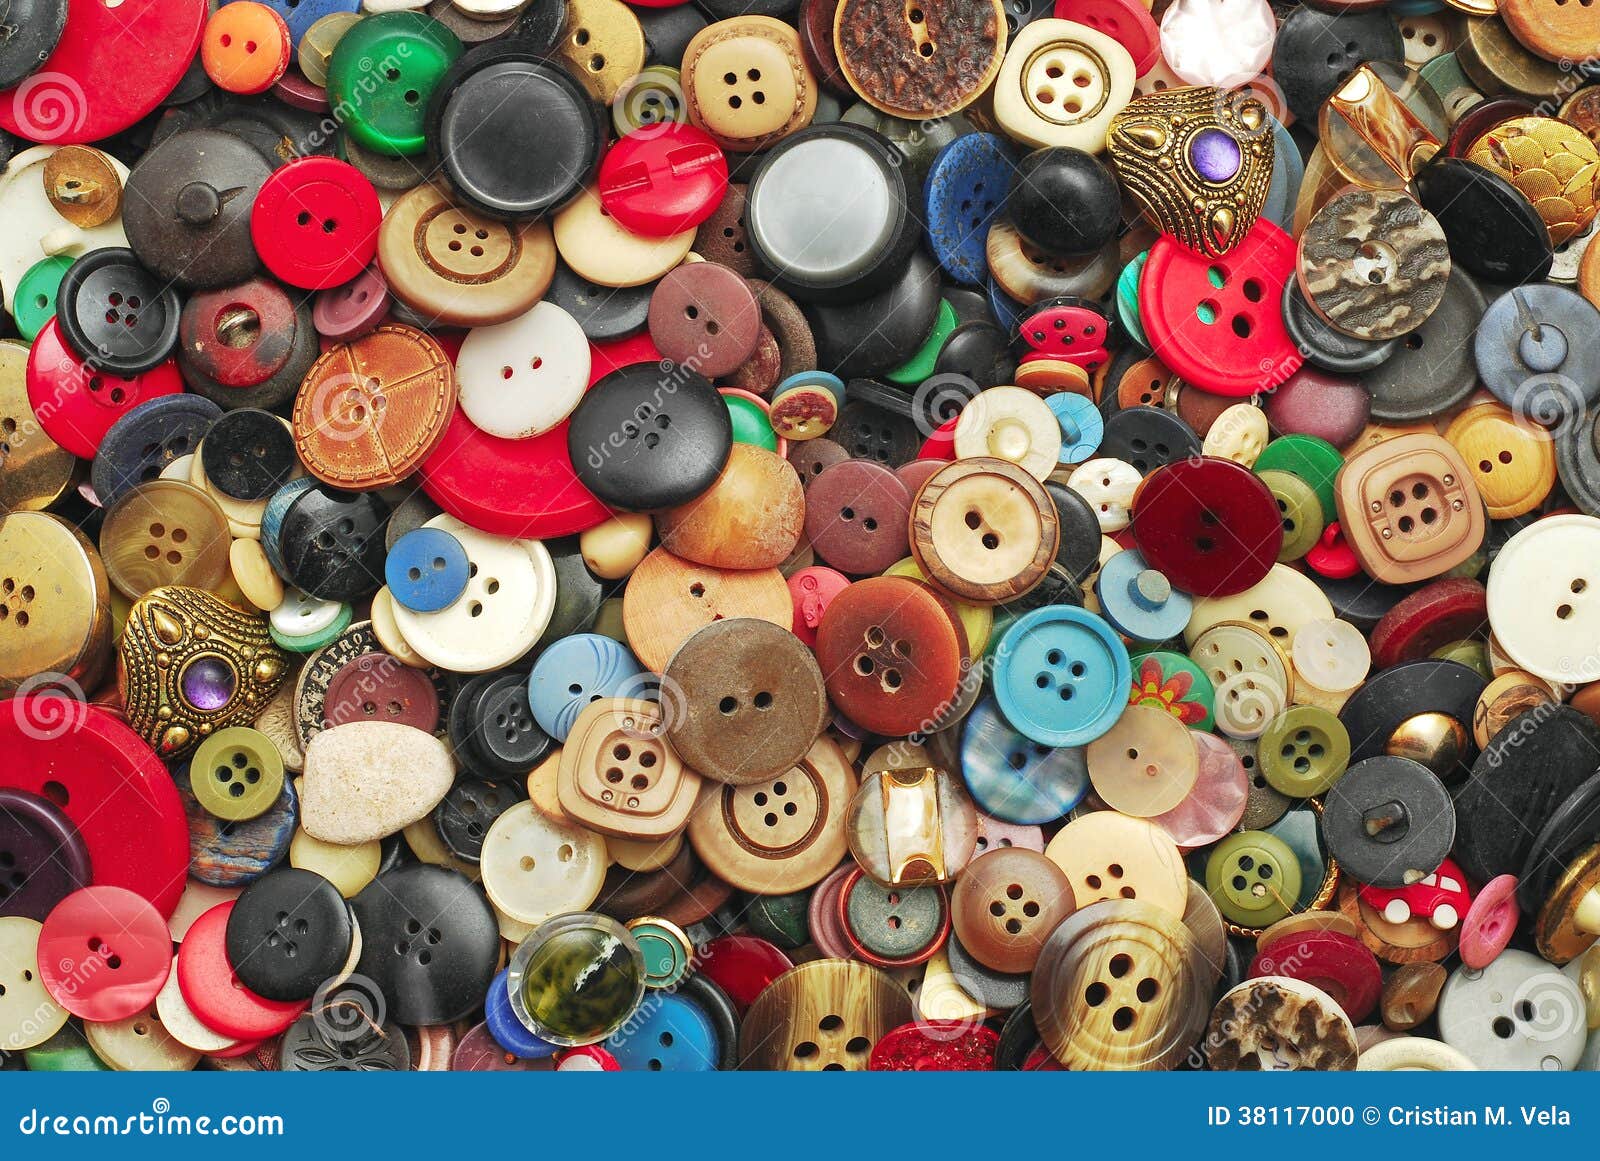 Vintage Button Collection 106